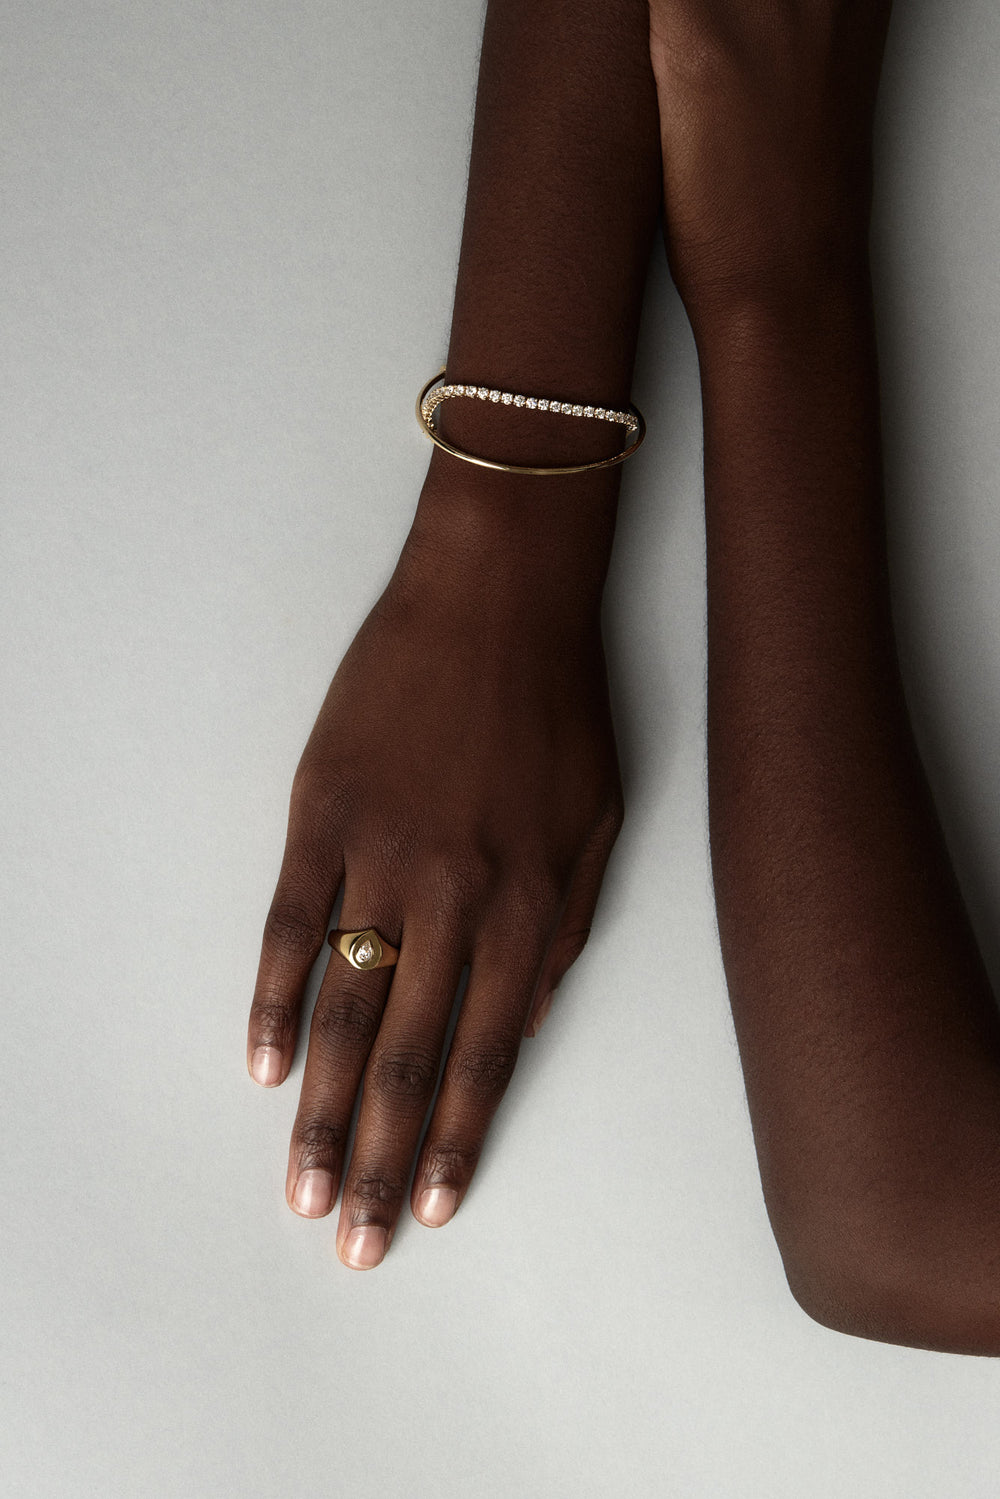 Pear Diamond Signet Ring | Yellow Gold| Natasha Schweitzer